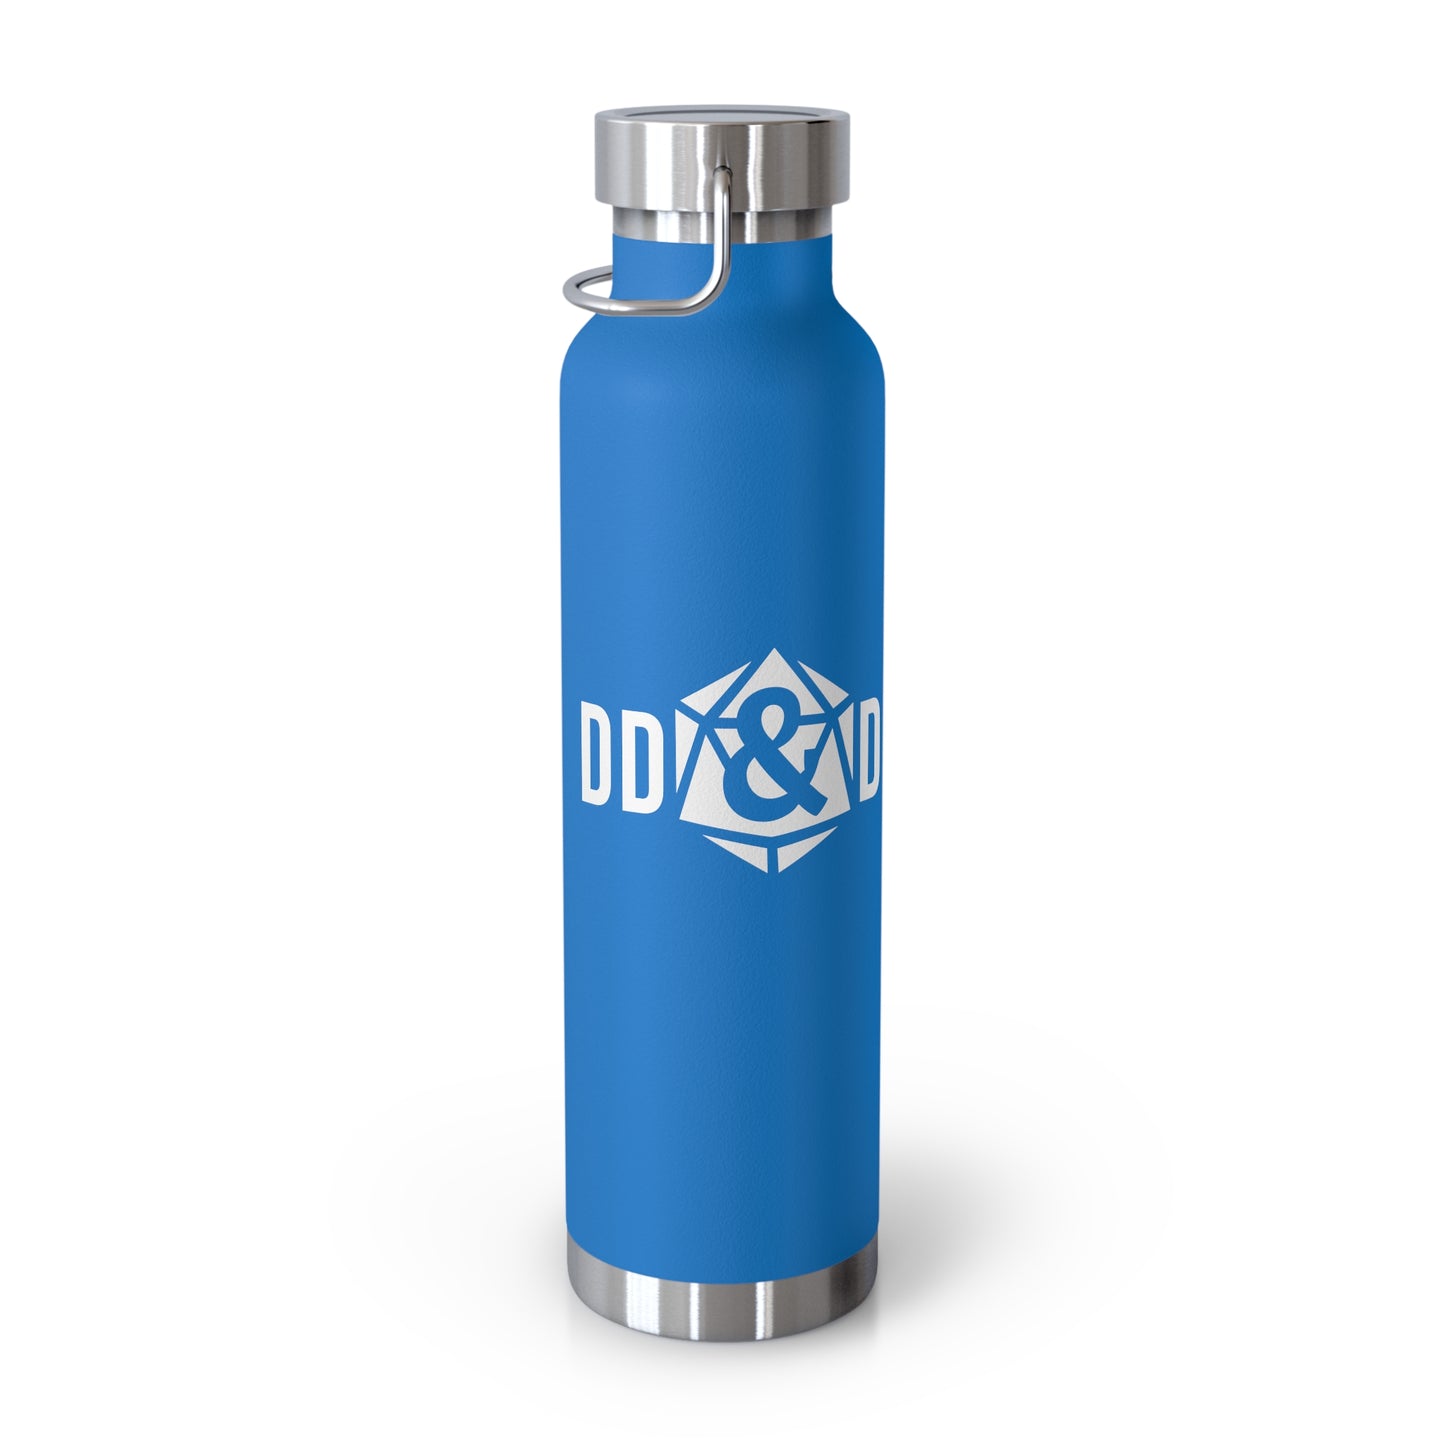 DD&D Logo Insulated Bottle